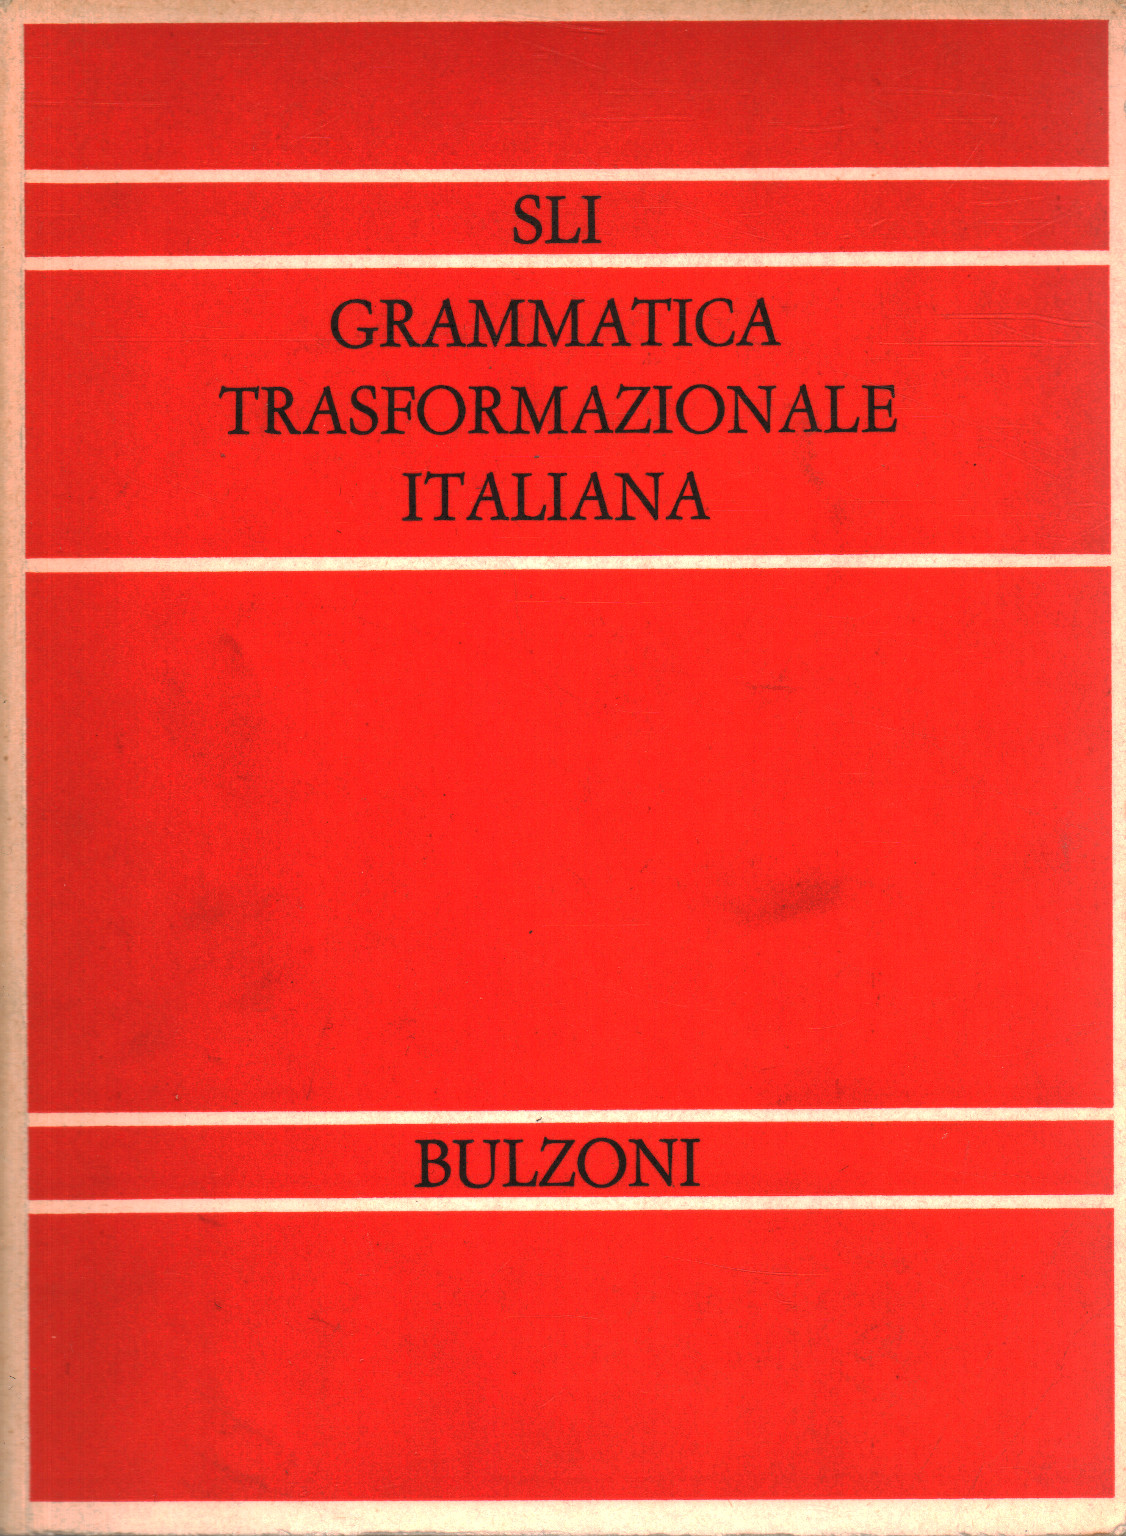 Grammar transformational Italian, s.a.